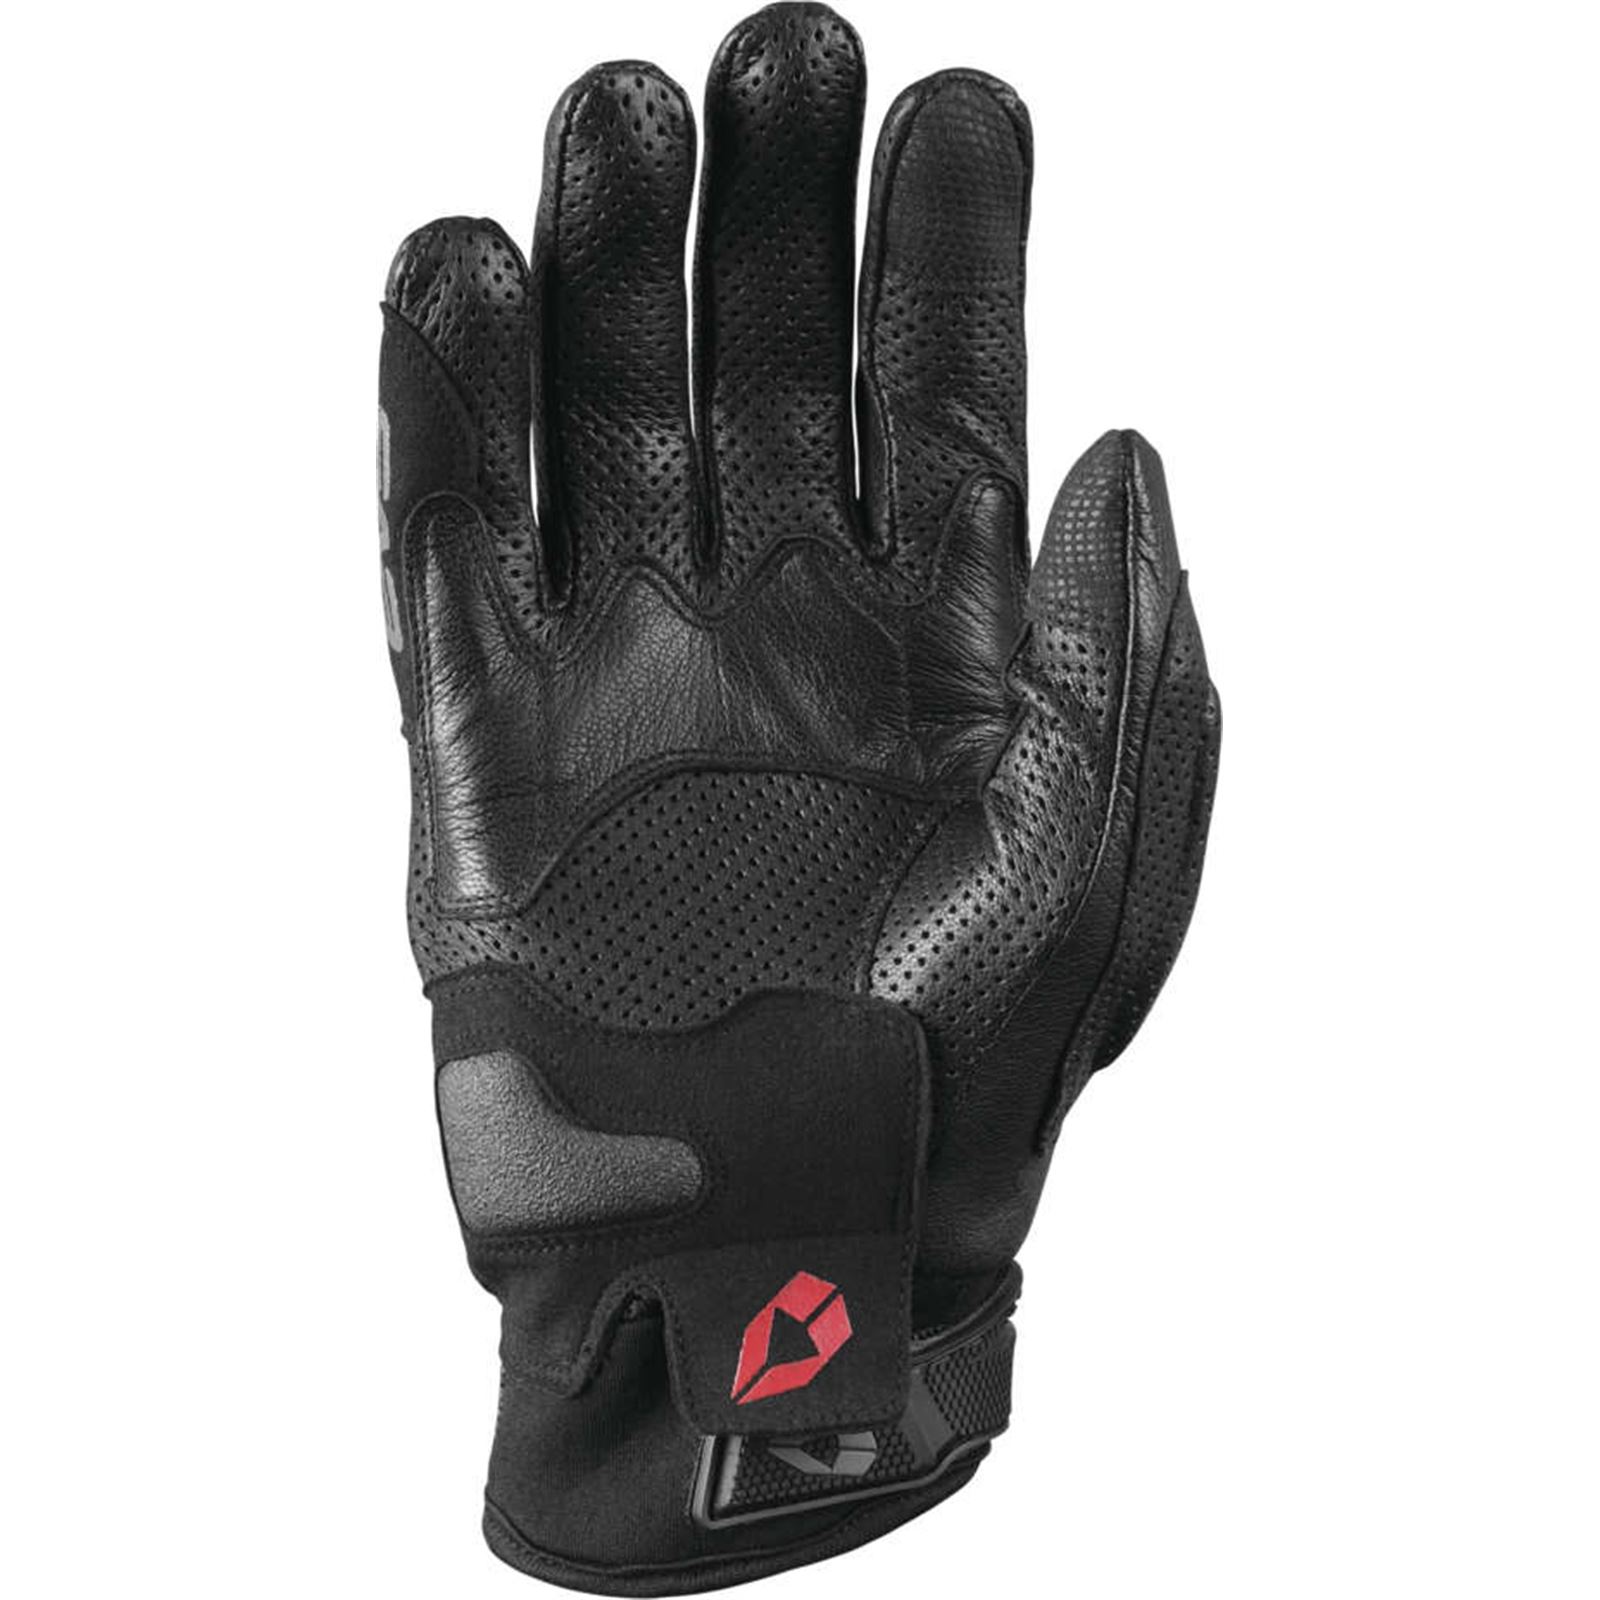 EVS Sports NYC Street Glove Black, Small